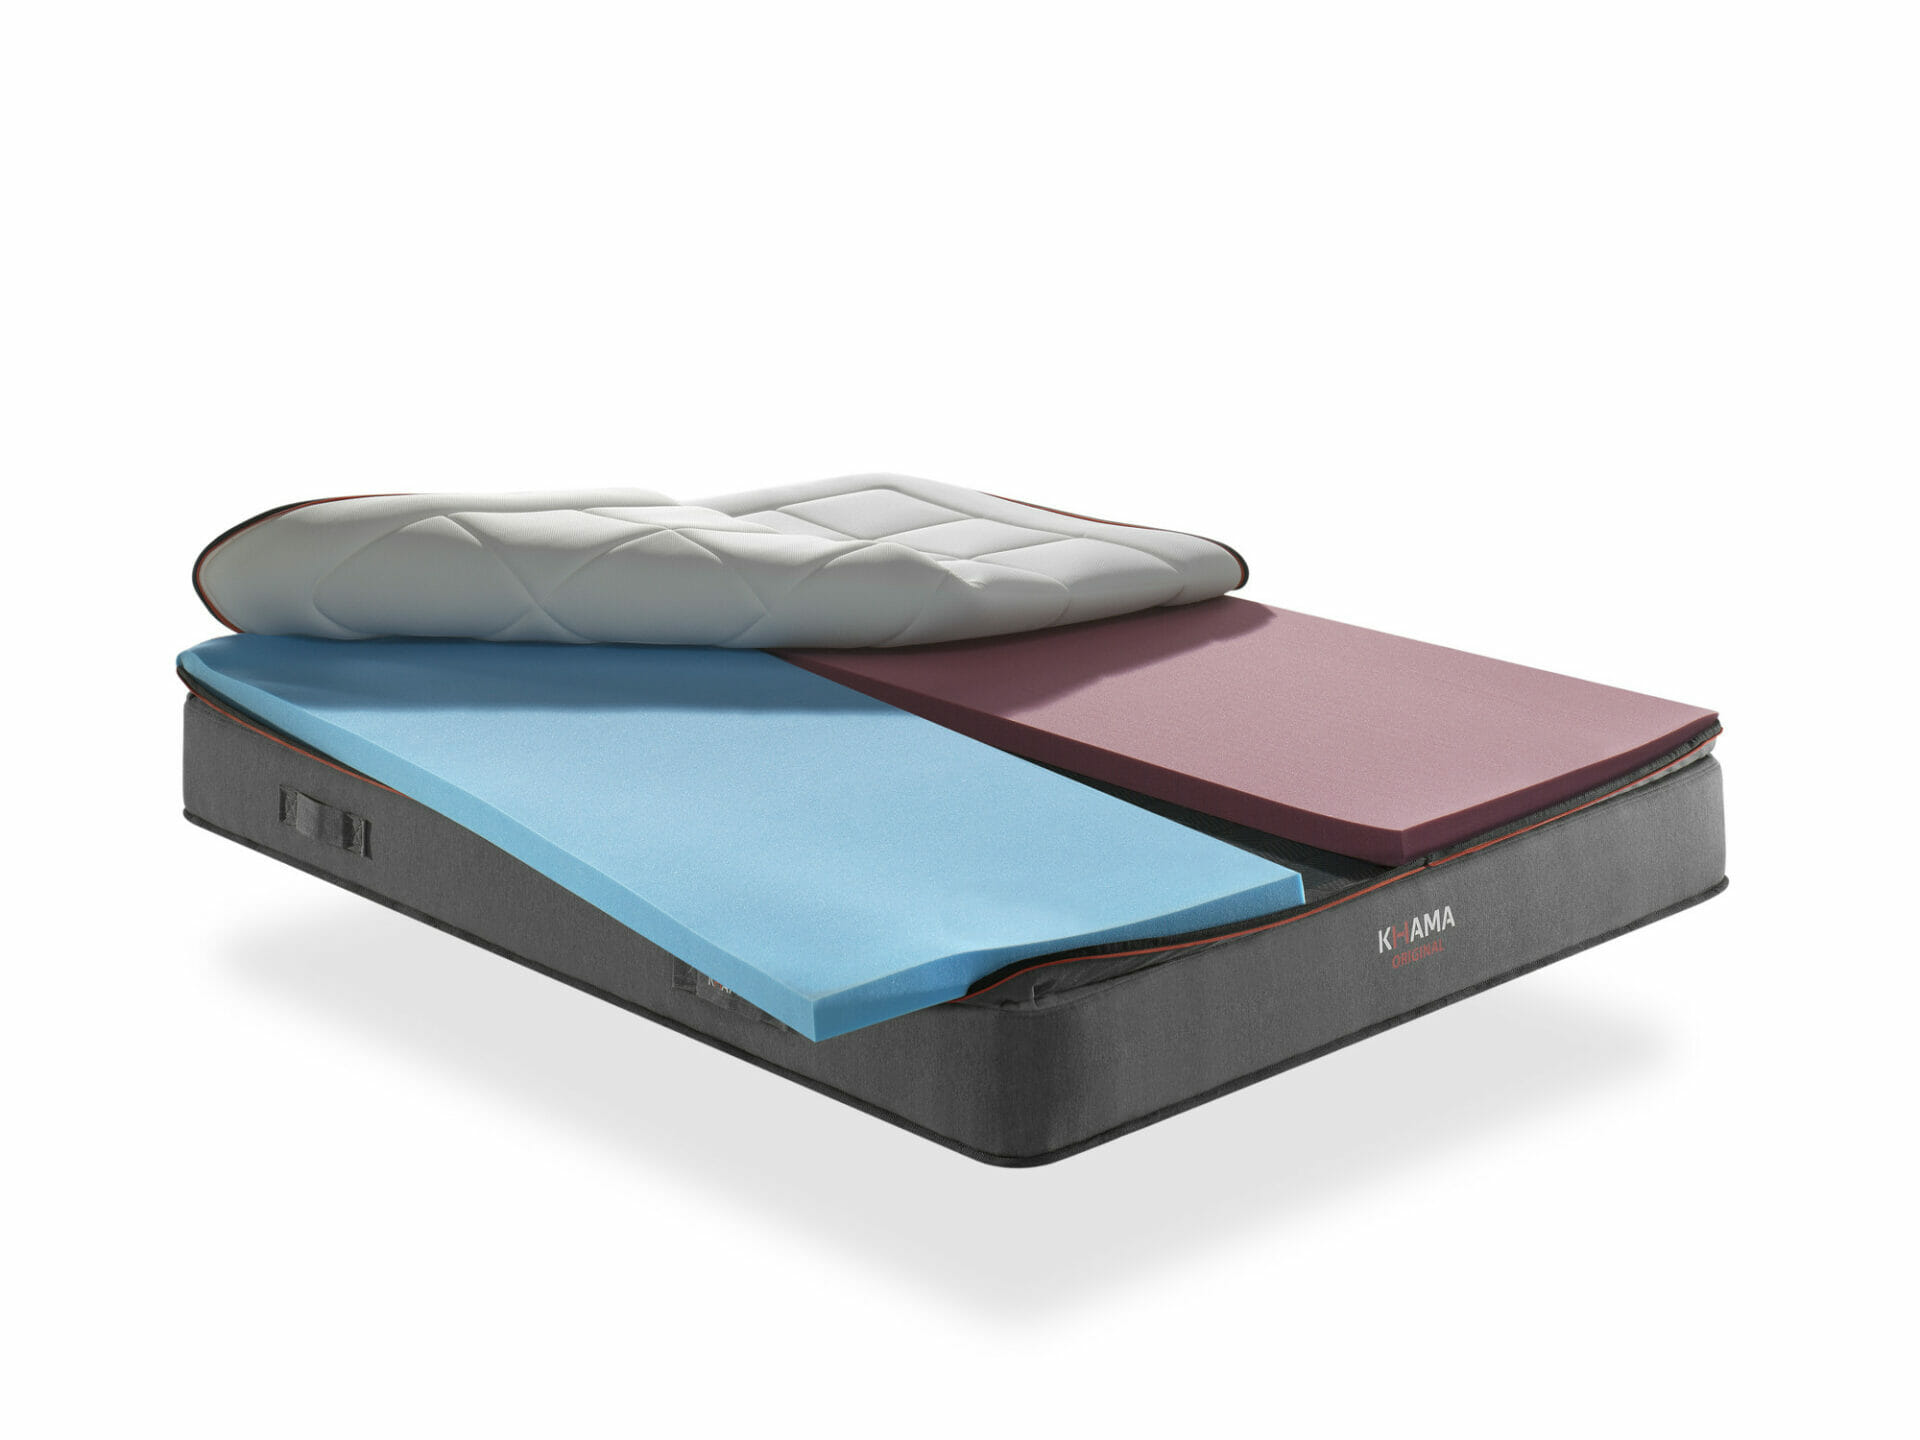 khama-original-mattress